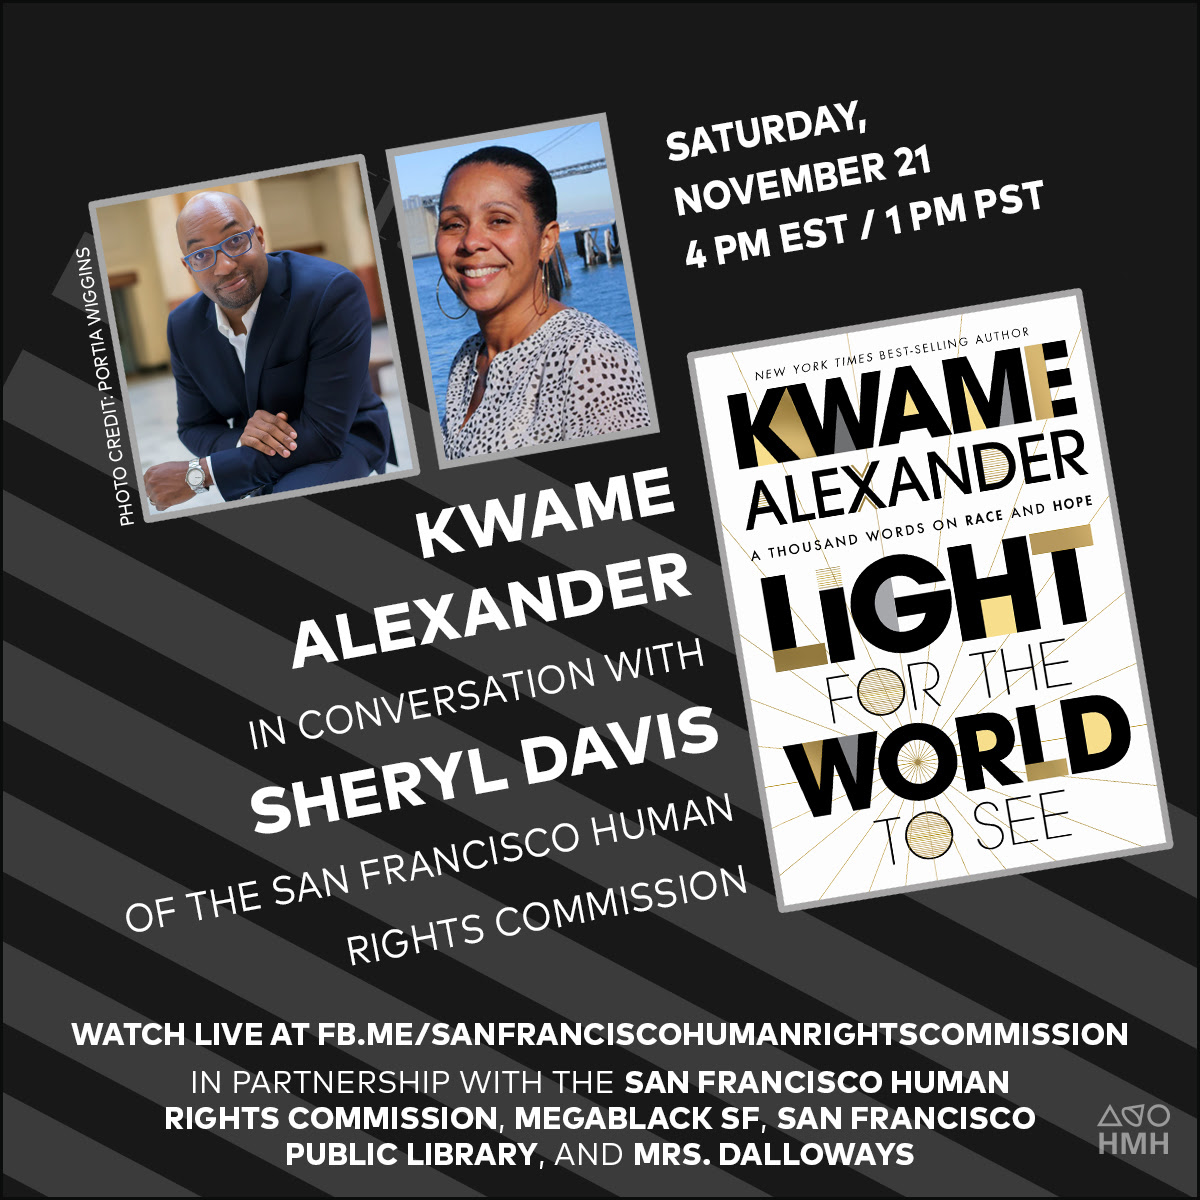 Kwame Alexander in conversation with Sheryl Davis, Nov. 21, 10:00 pm.